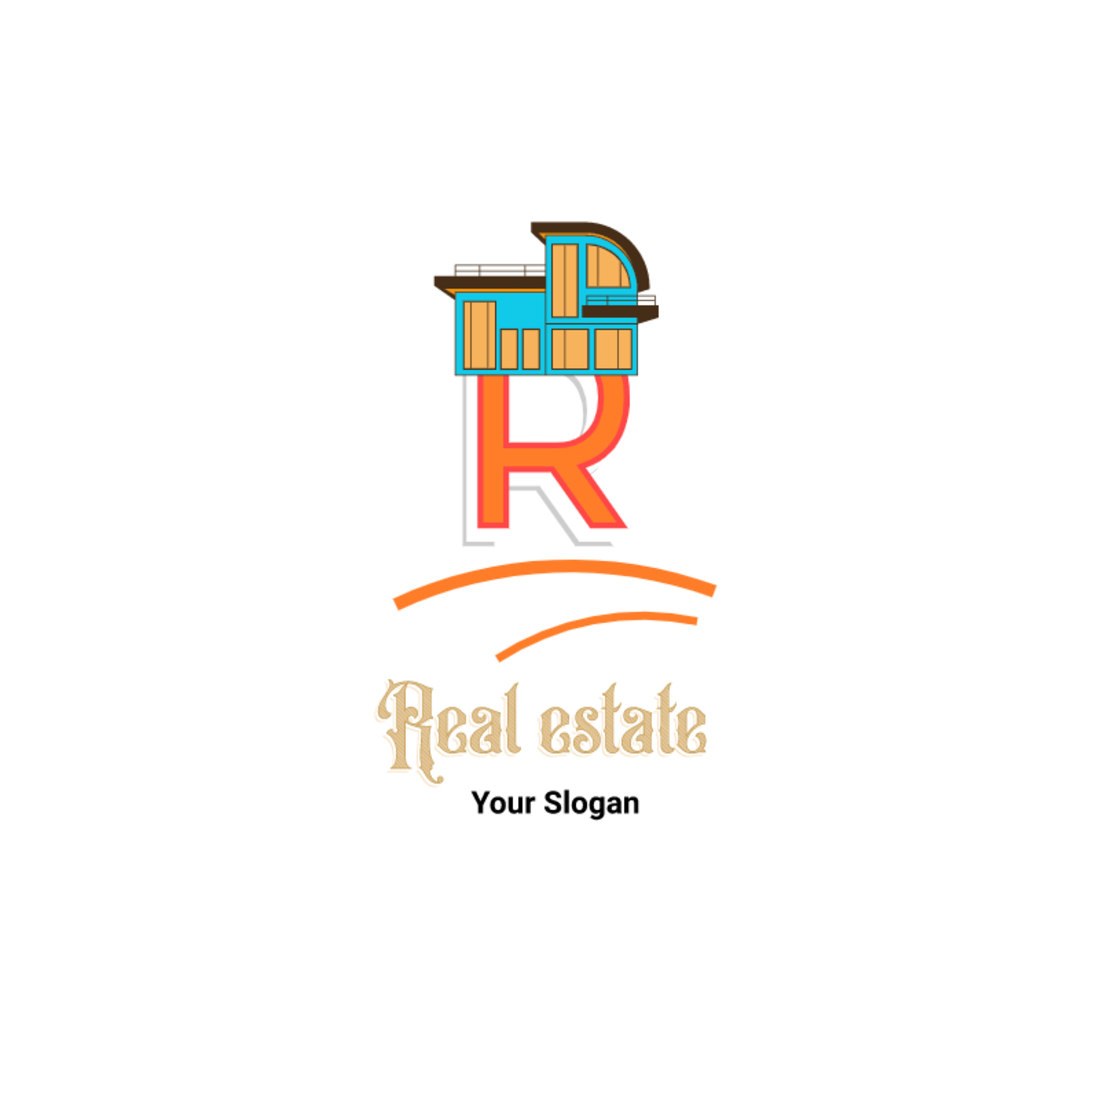 R - Real Estate Letter Logo Design Template cover image.